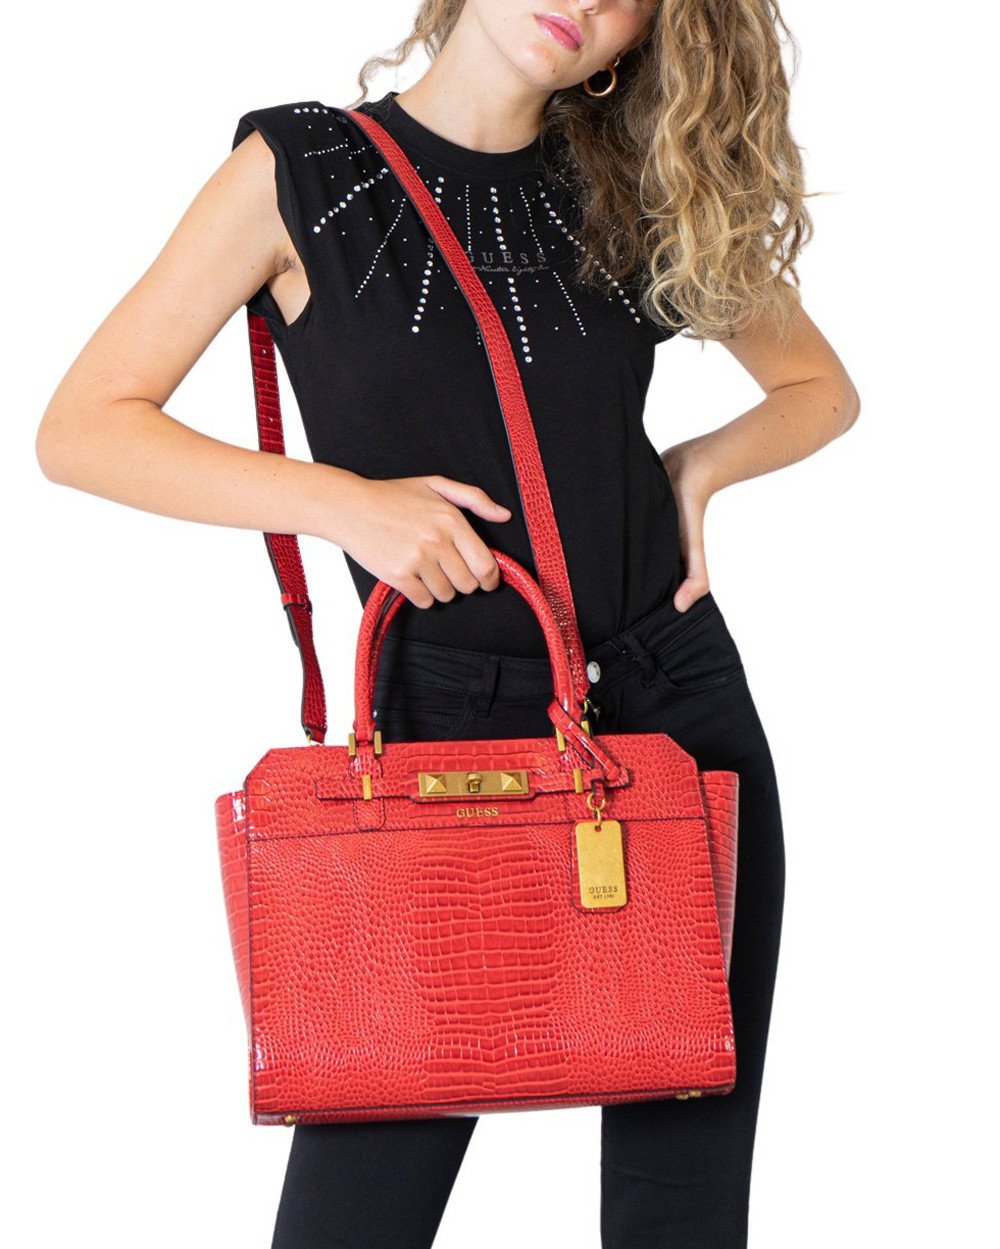 Guess Women's Handbag Various Colours 305552 - red UNICA